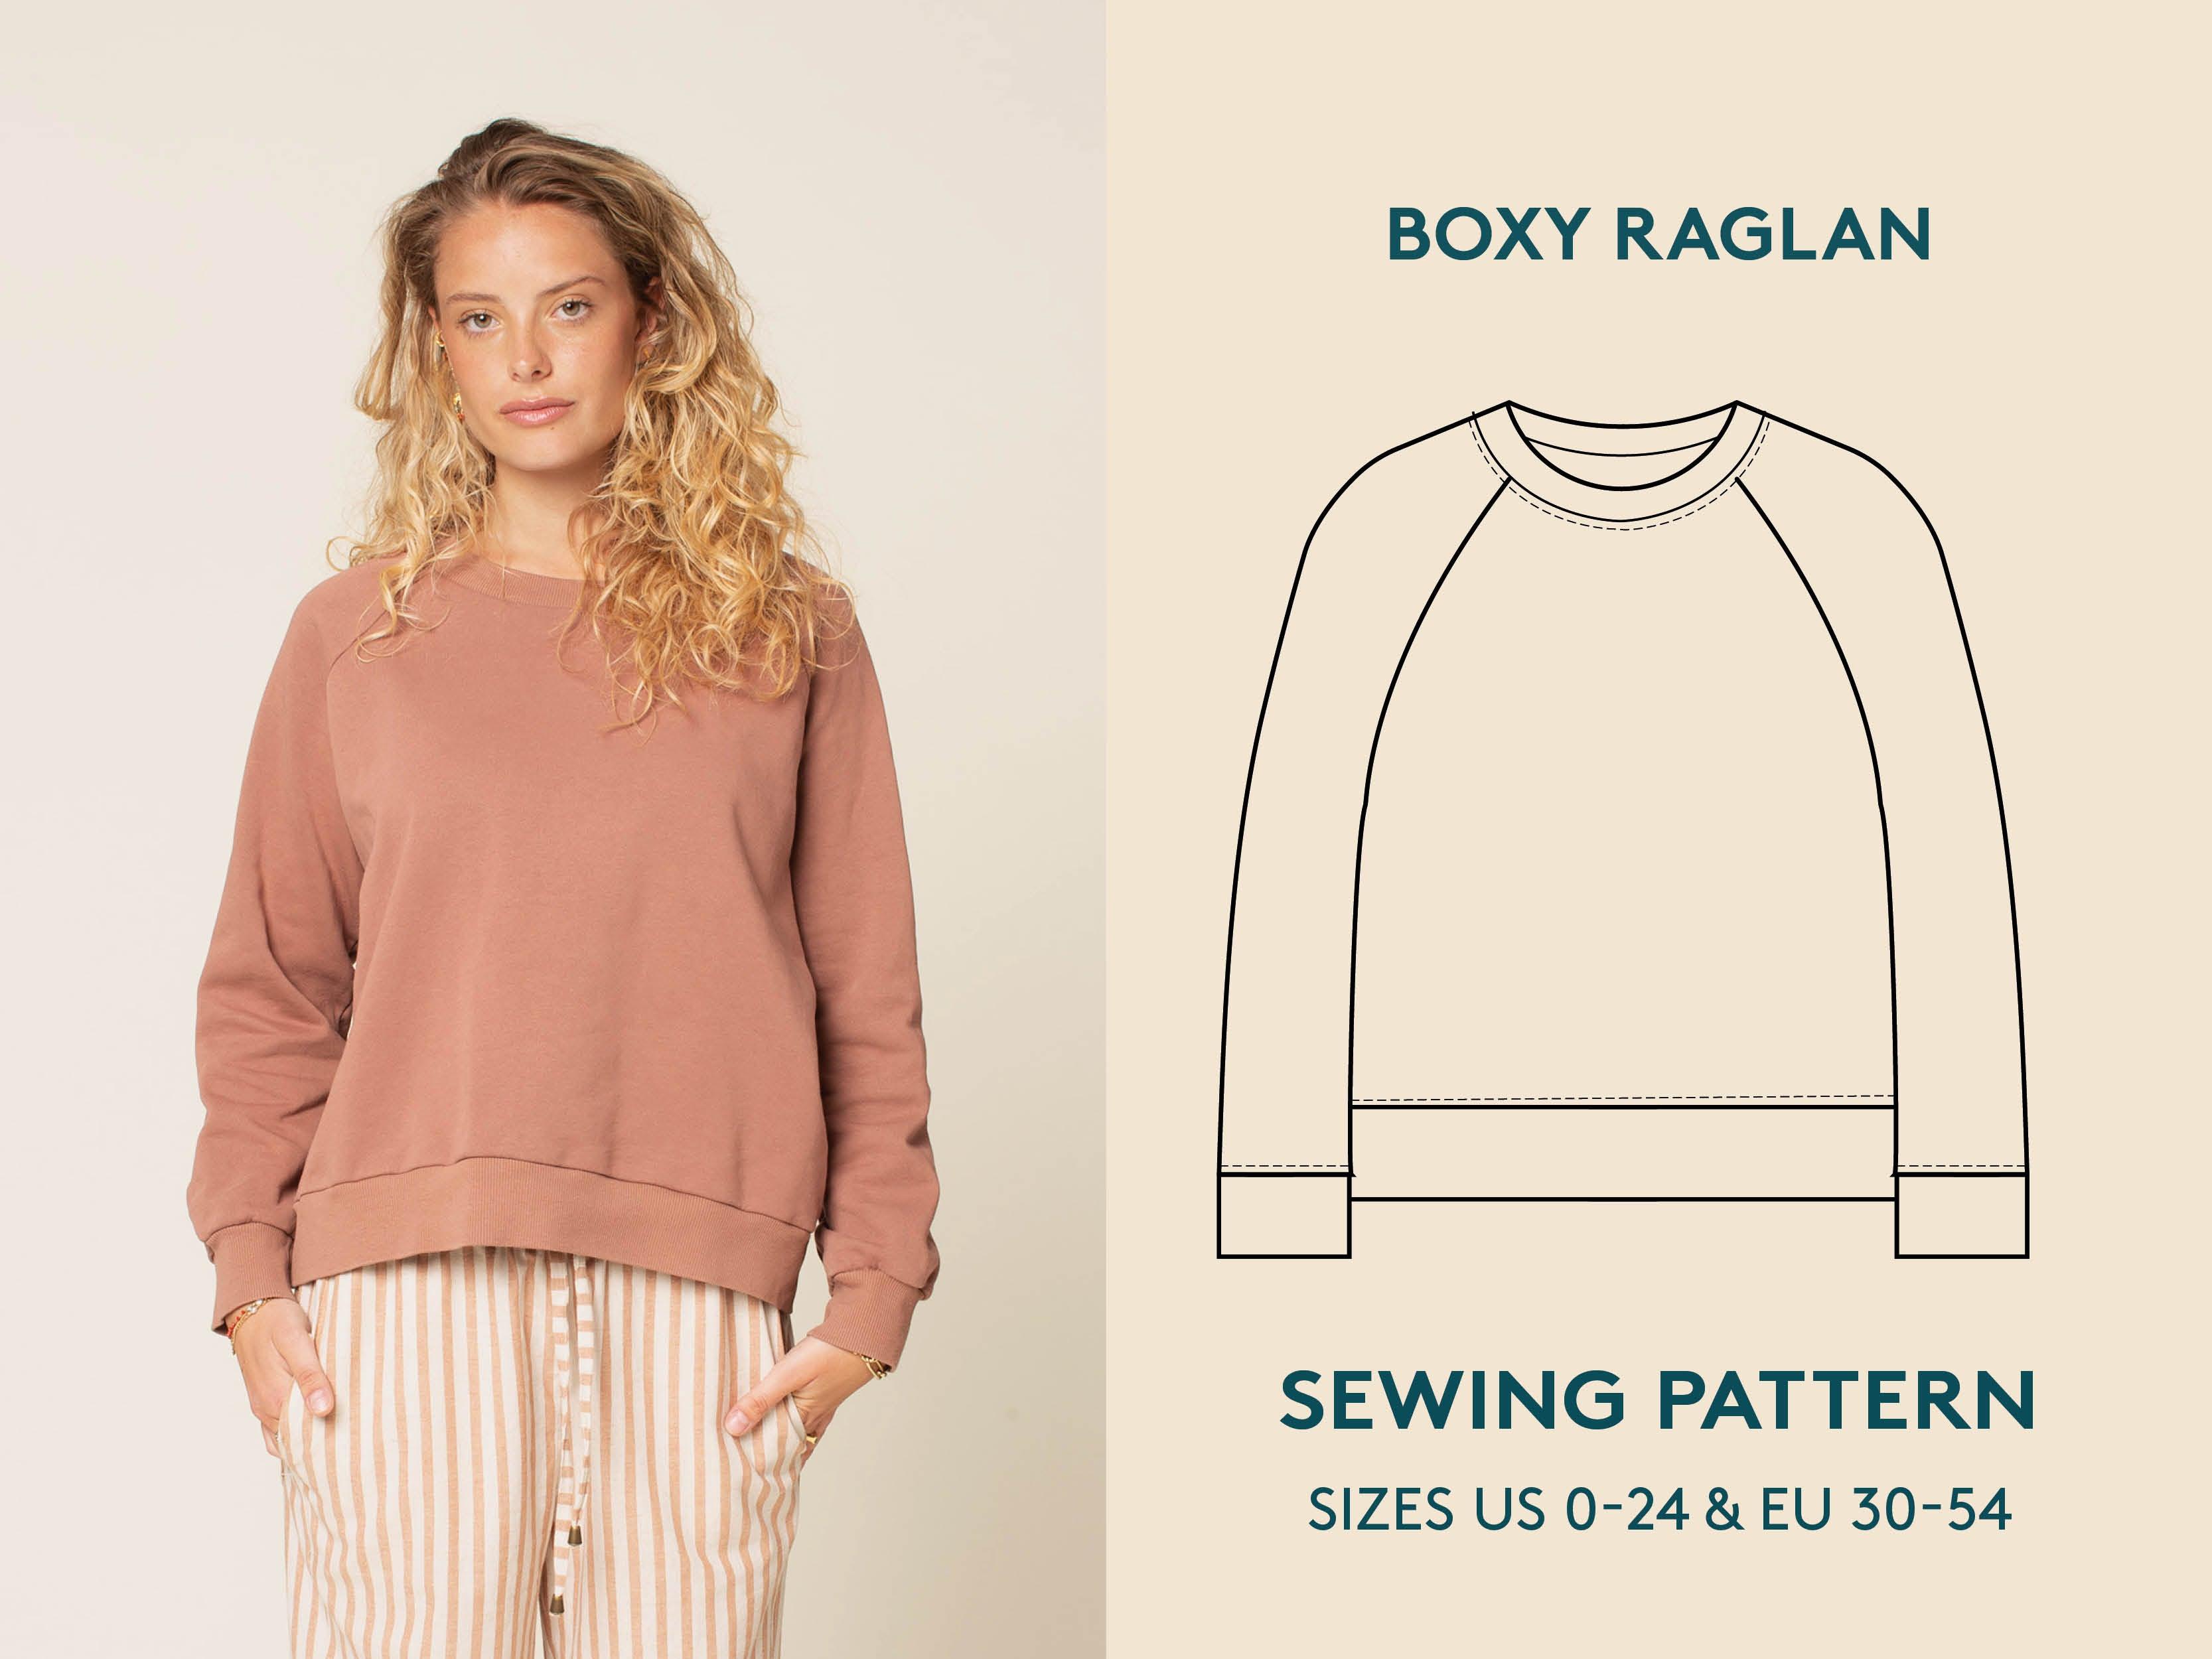 Boxy Raglan sewing pattern